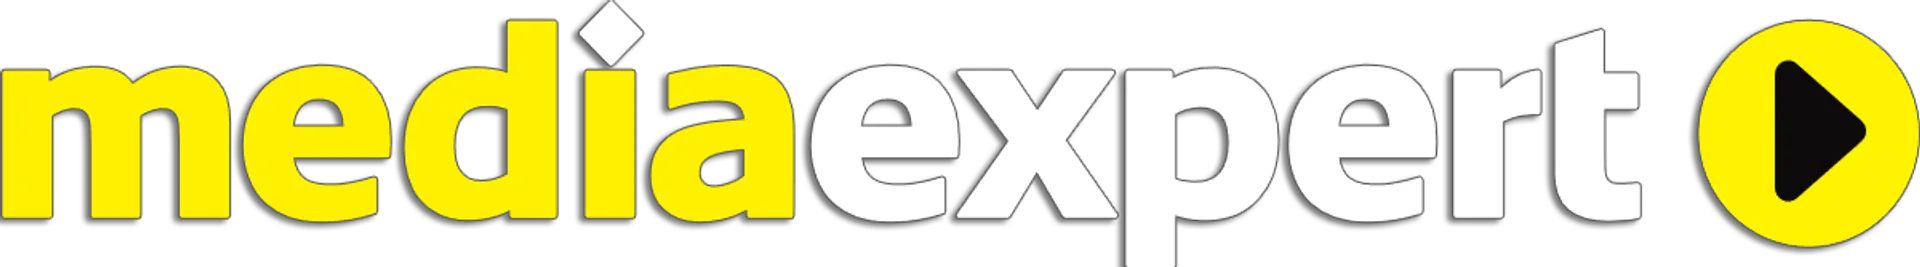 MEDIA EXPERT logo